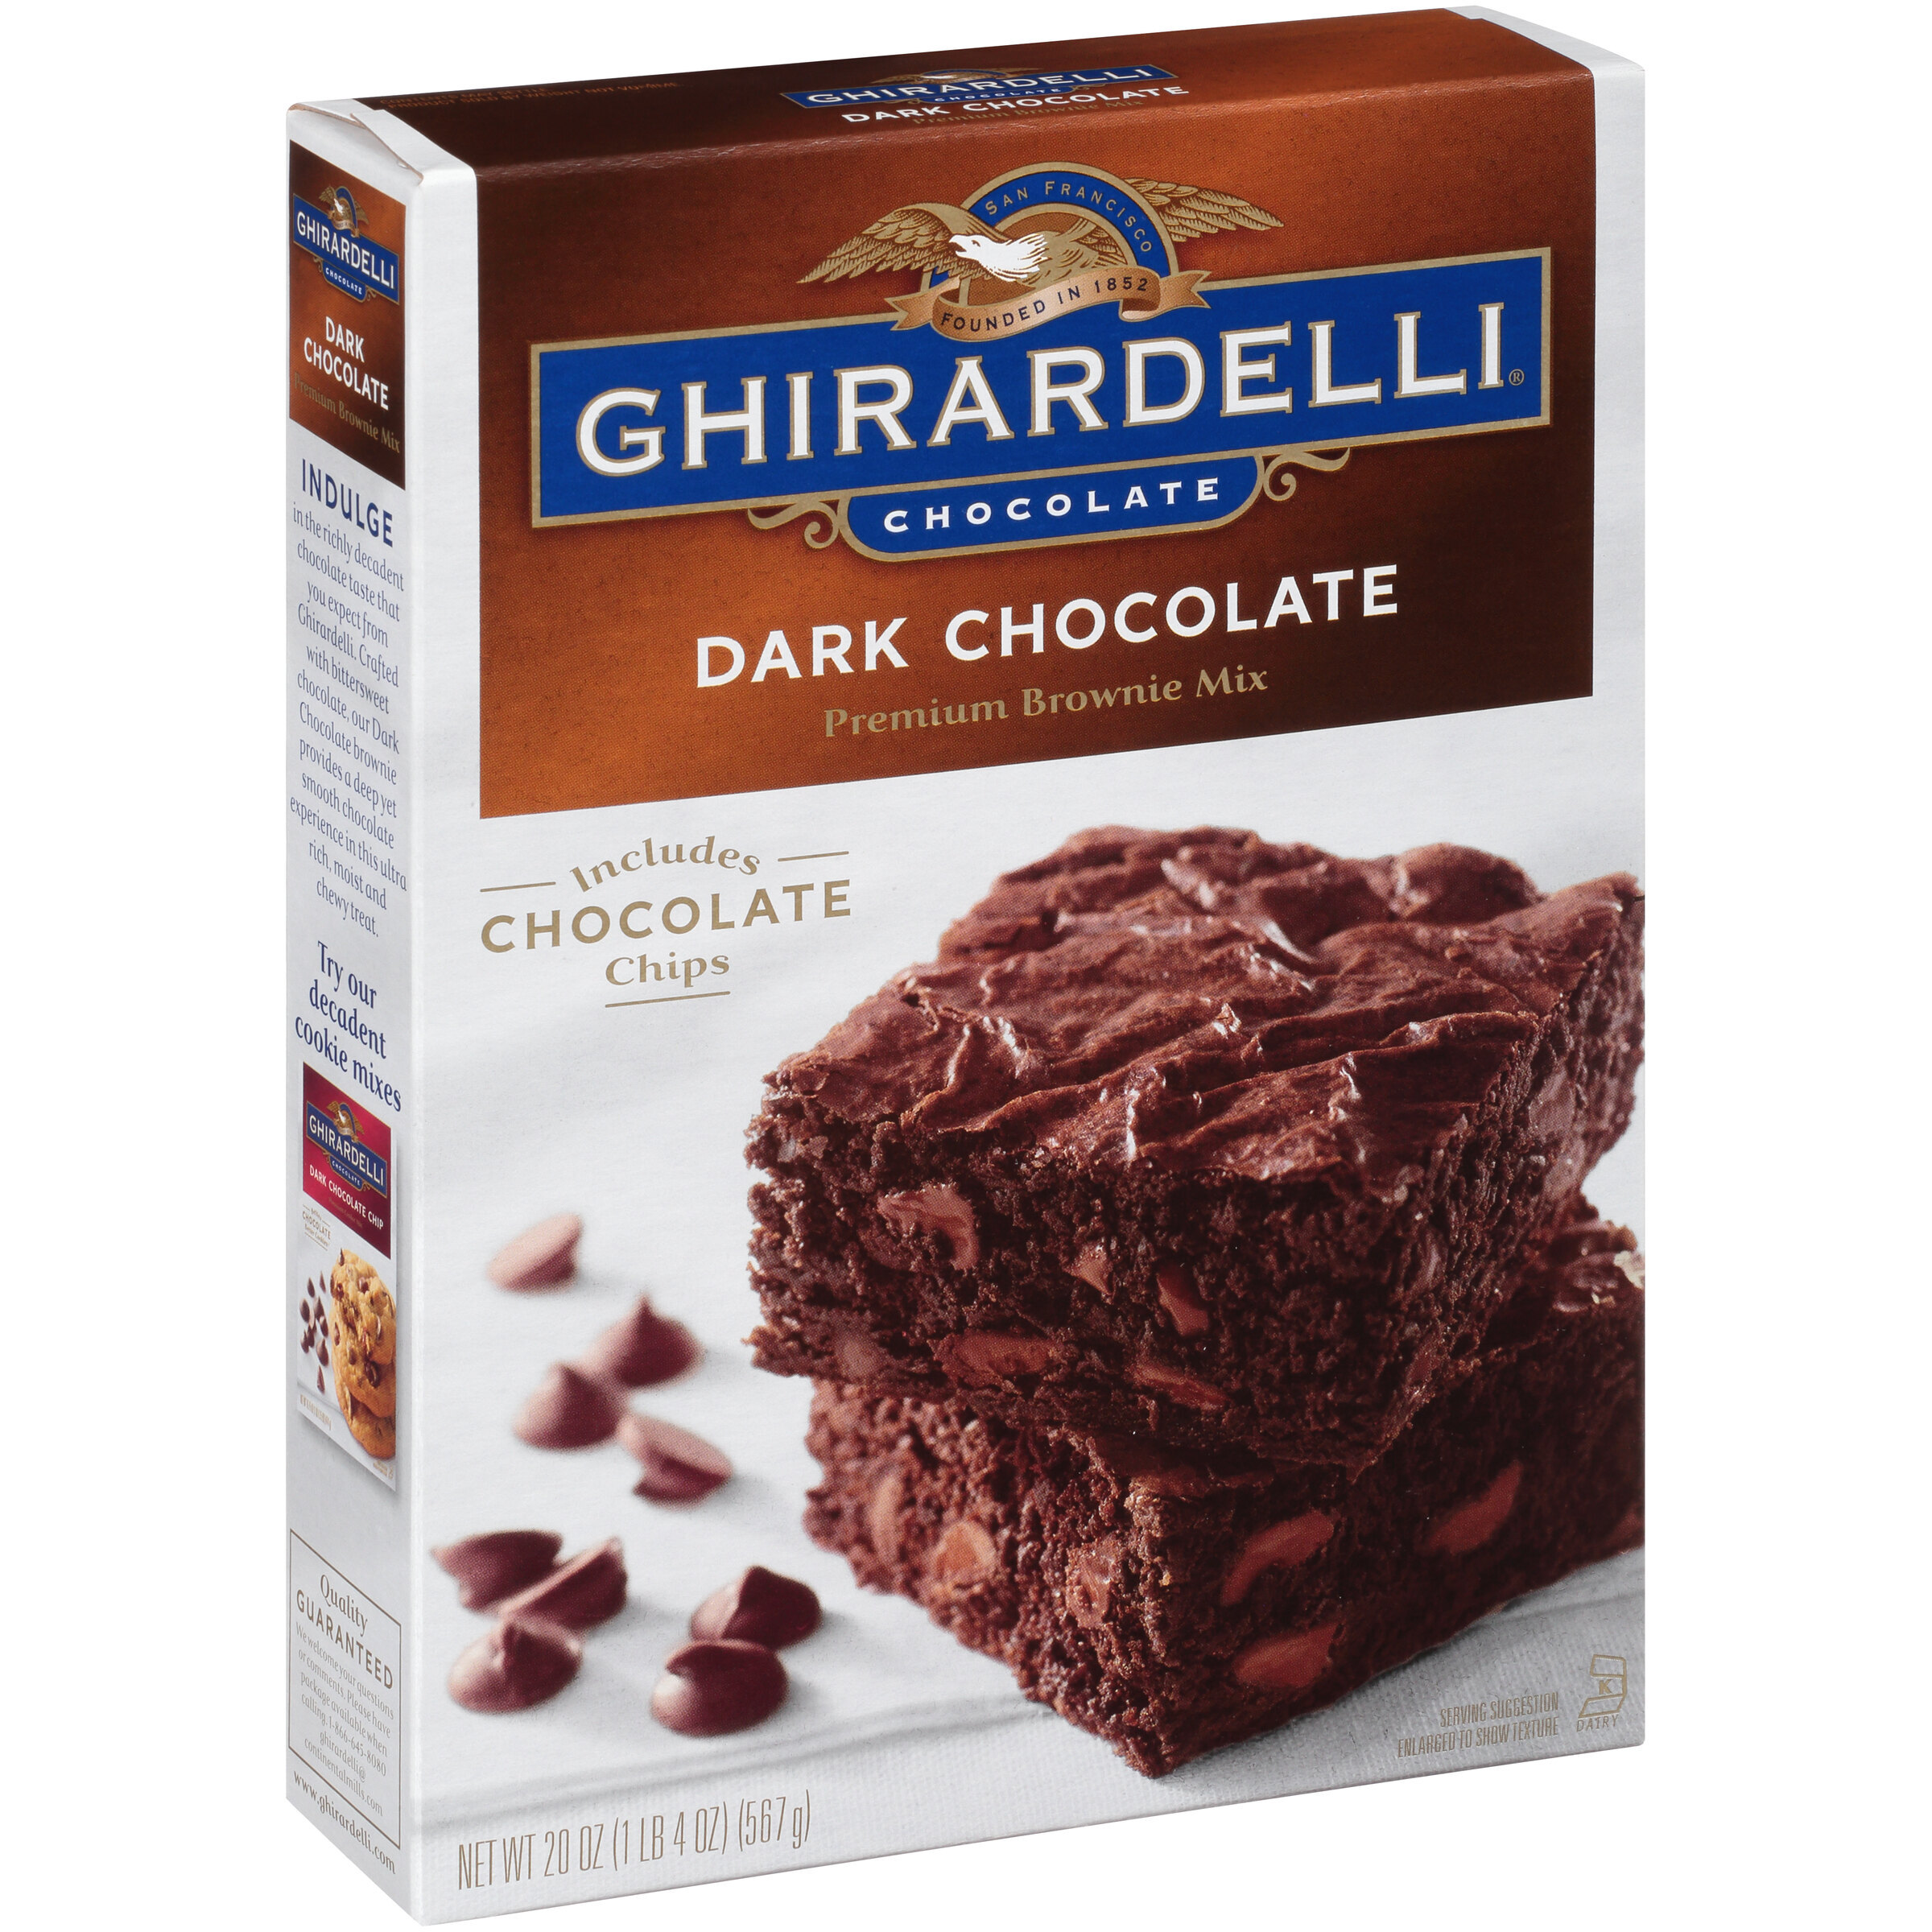 Ghirardelli Dark Chocolate Premium Brownie Mix, Includes Chocolate Chips, 20 oz Box - image 4 of 11